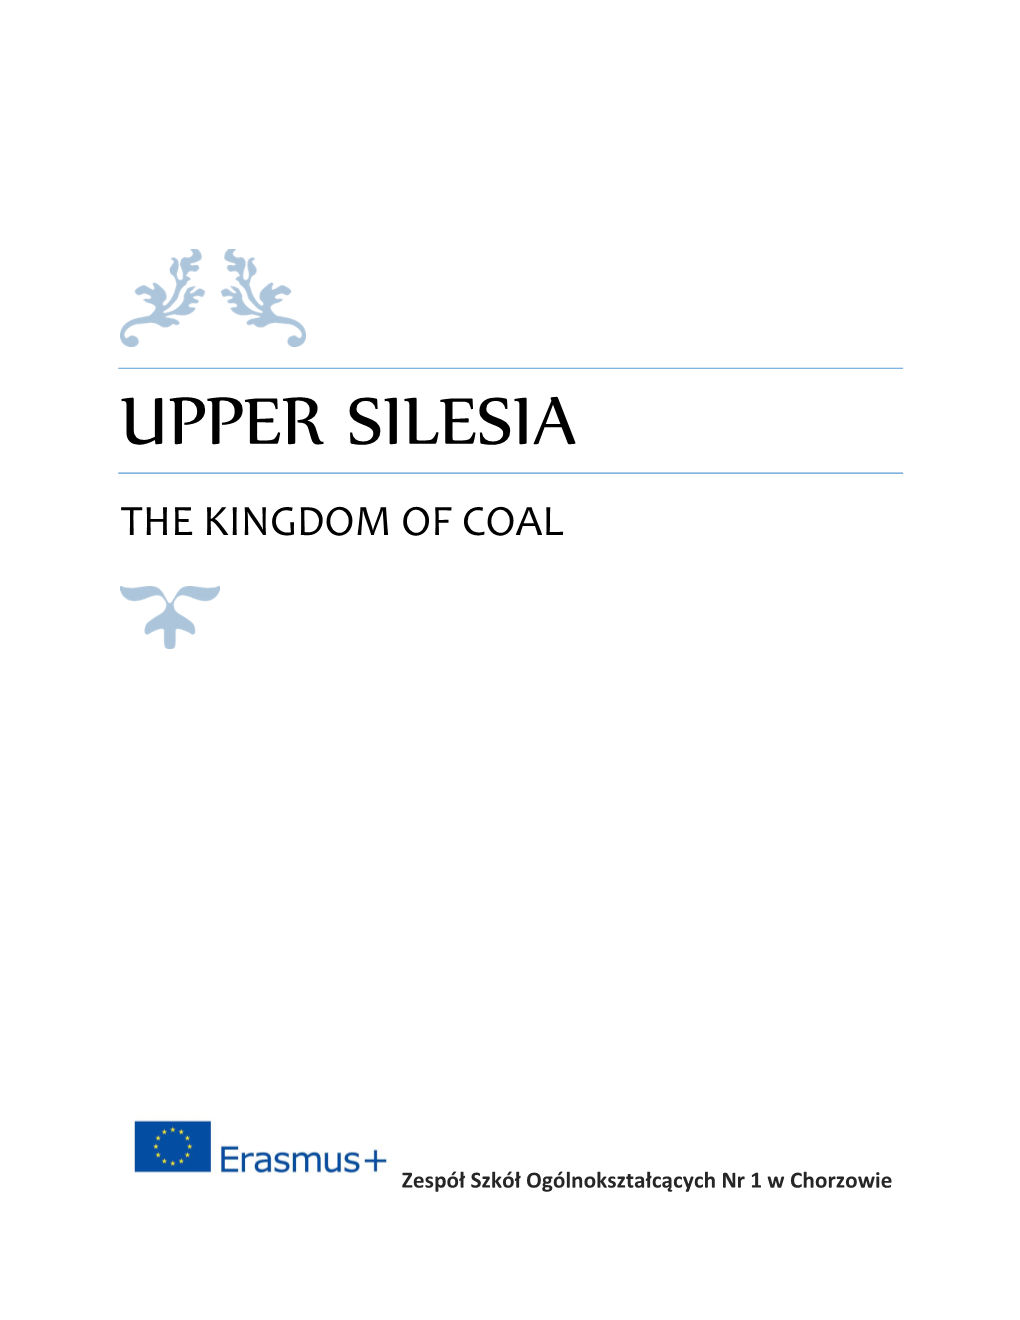 Upper Silesia